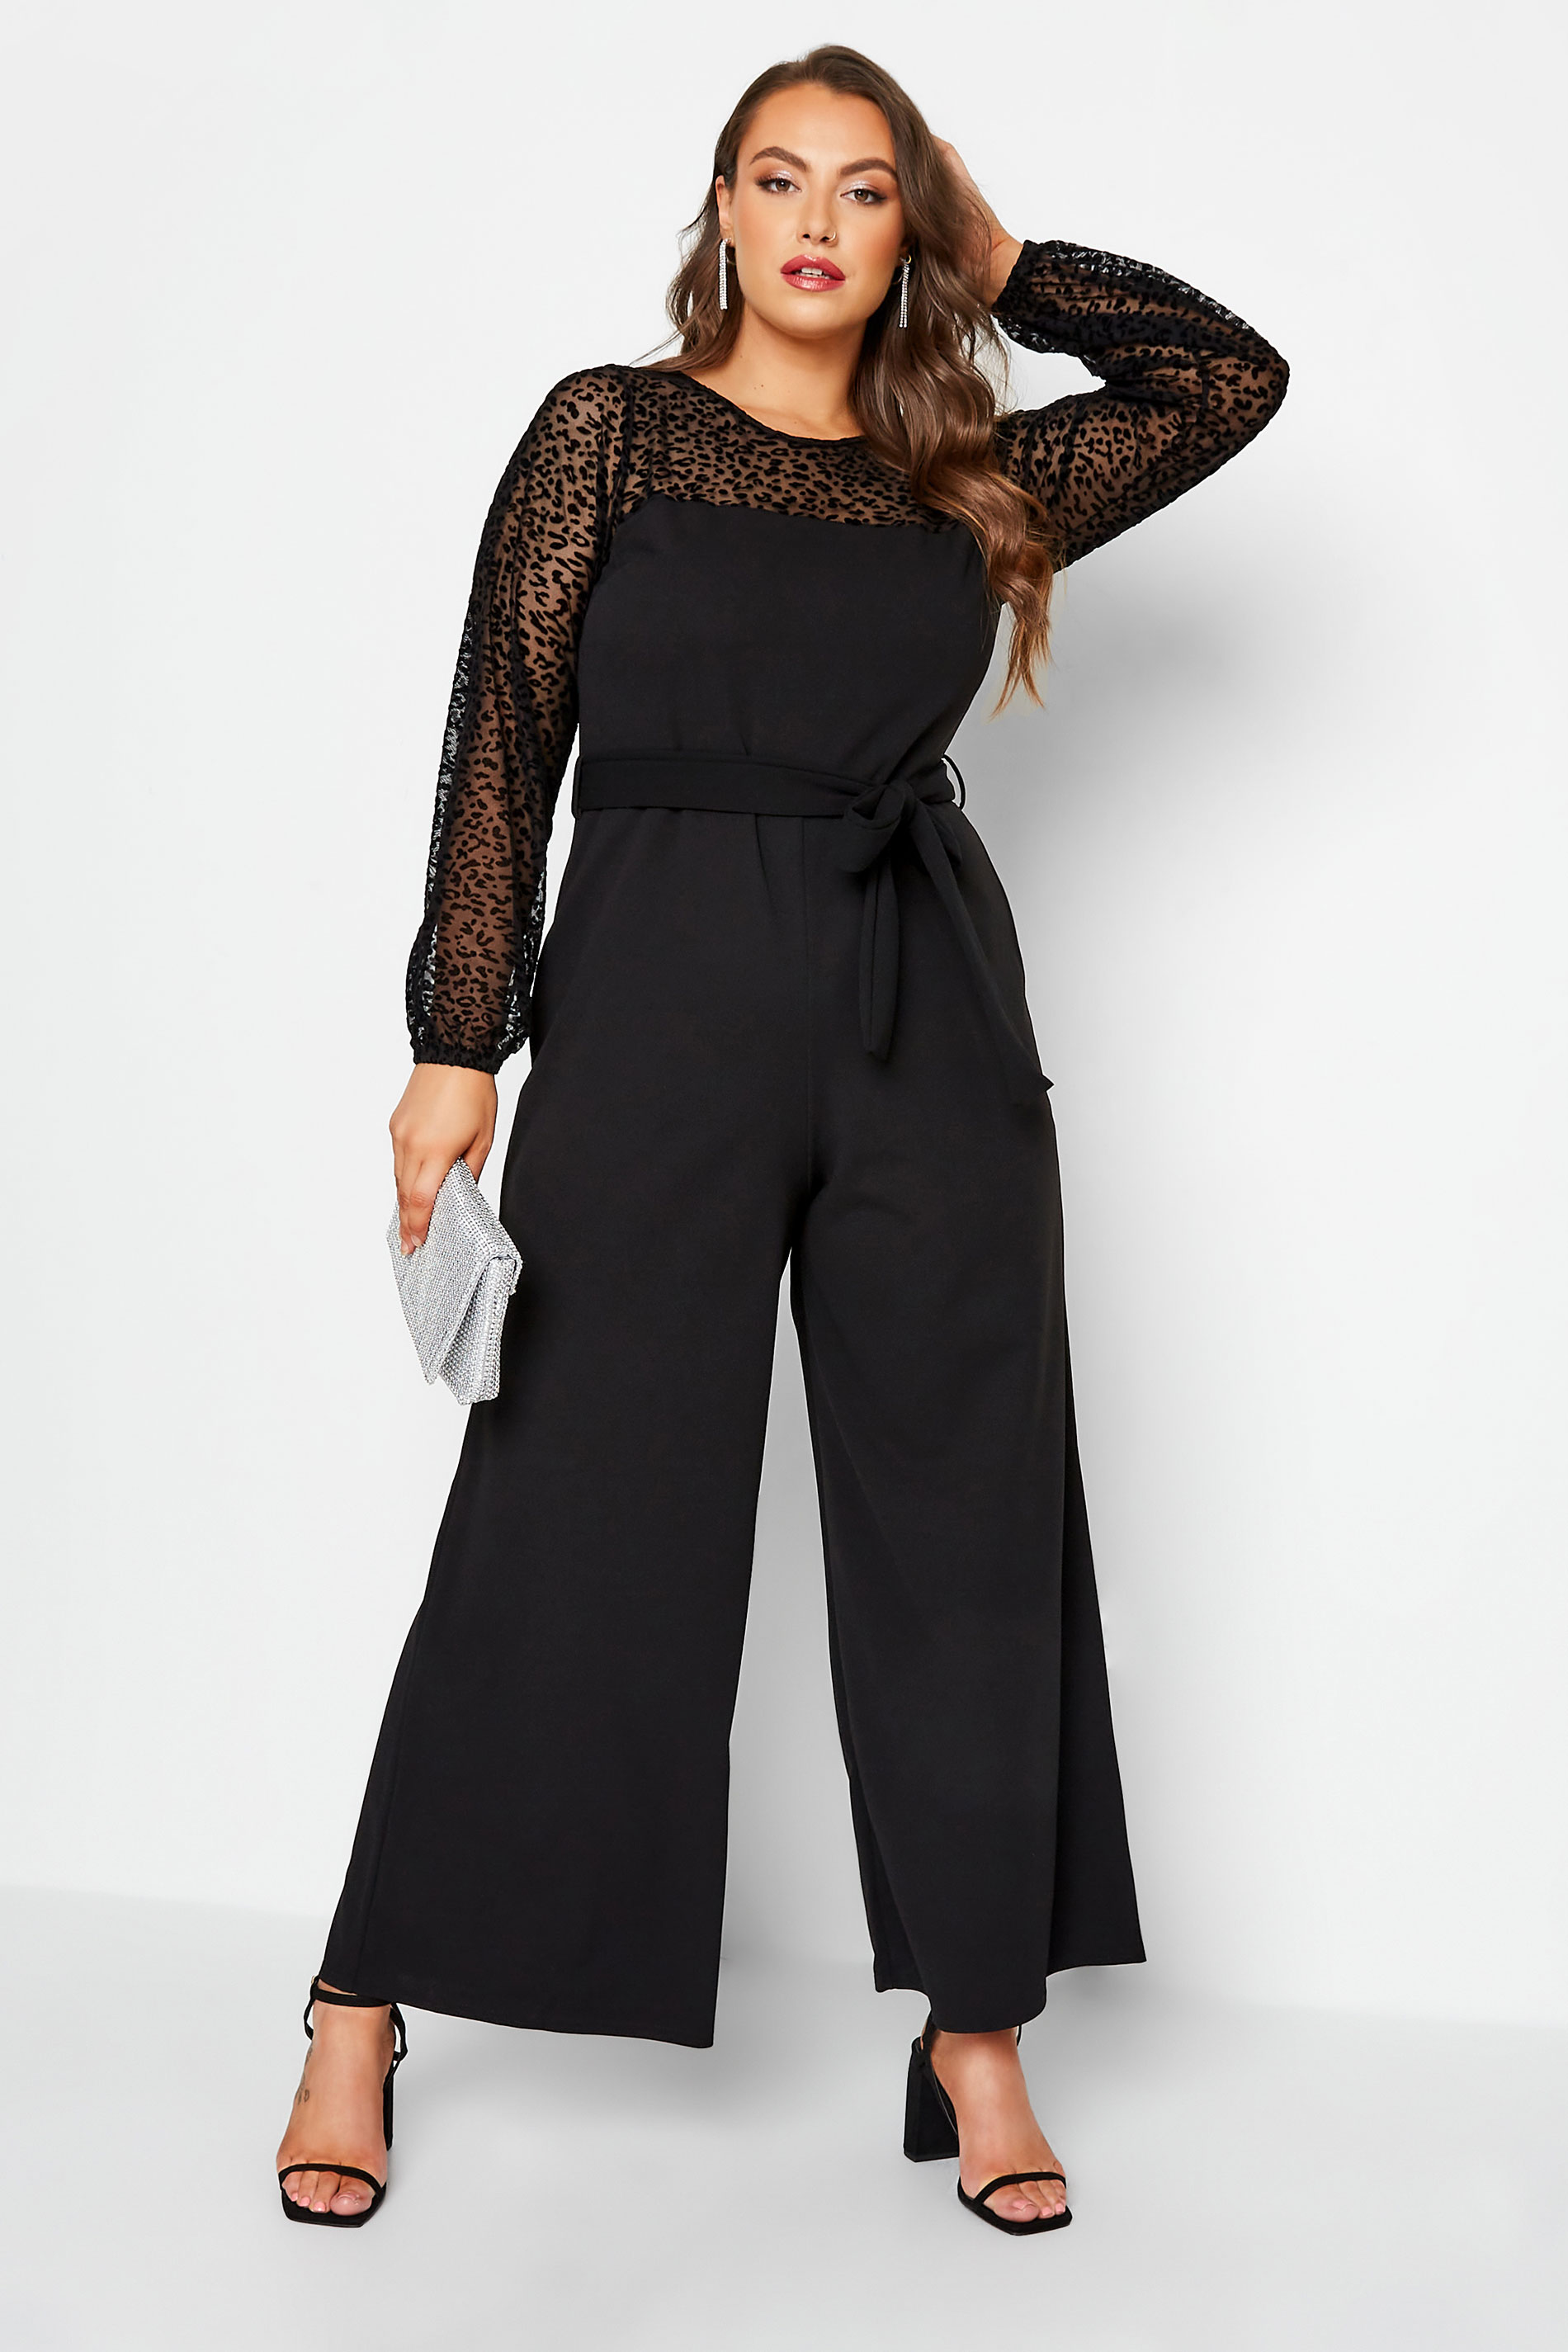 YOURS LONDON Plus Size Black Flocked Leopard Print Jumpsuit | Yours Clothing 1